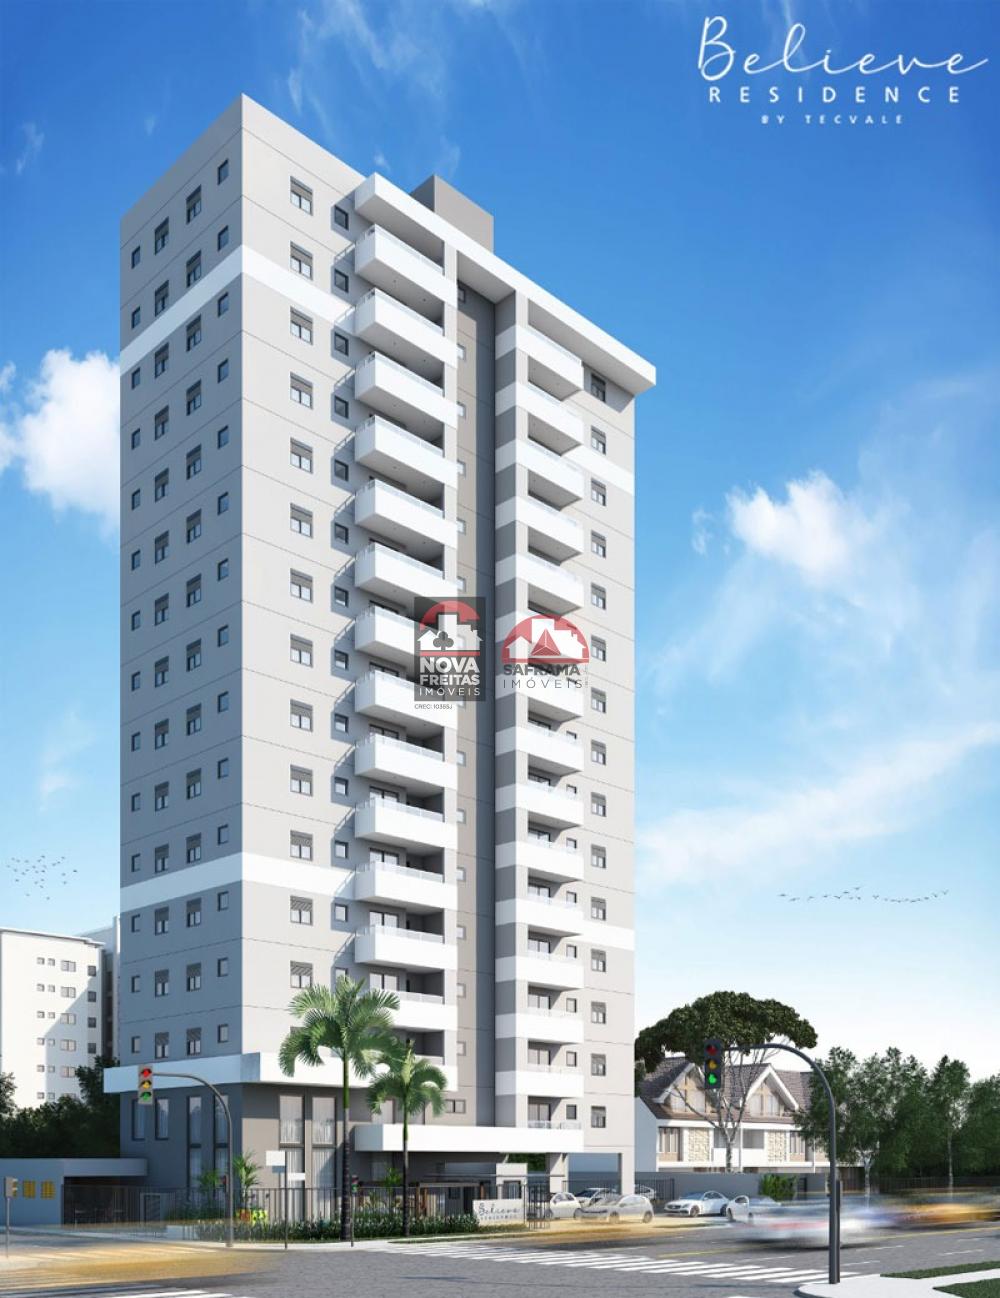 Condomnio - Believe Residence - Edifcio de Apartamento